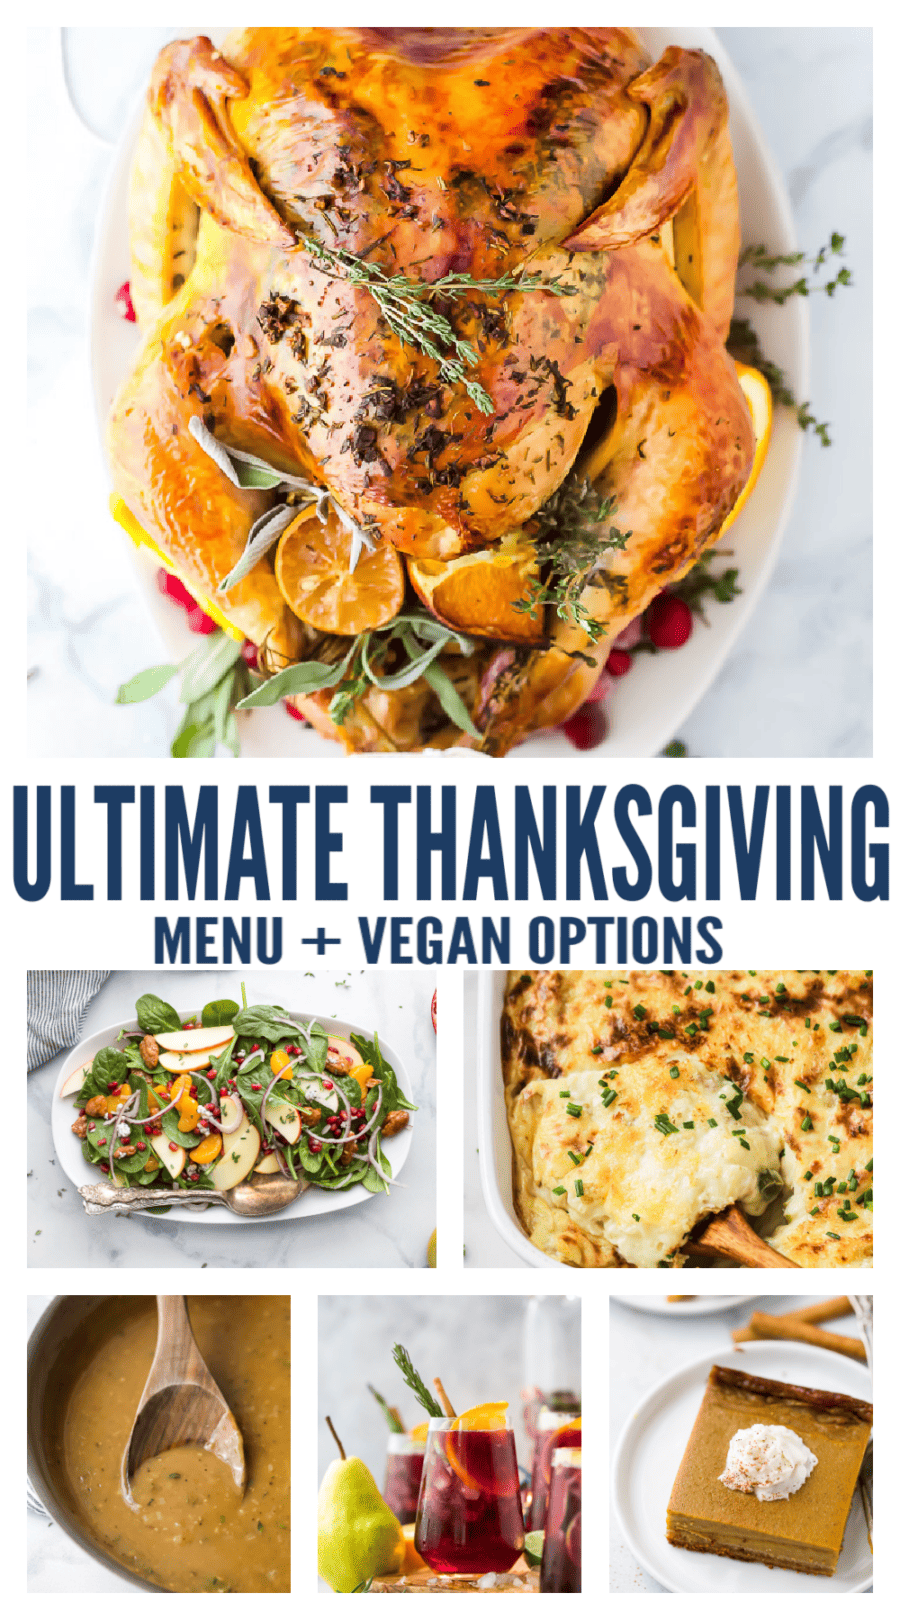 The Ultimate Traditional Thanksgiving Menu (+ Vegan Options!)